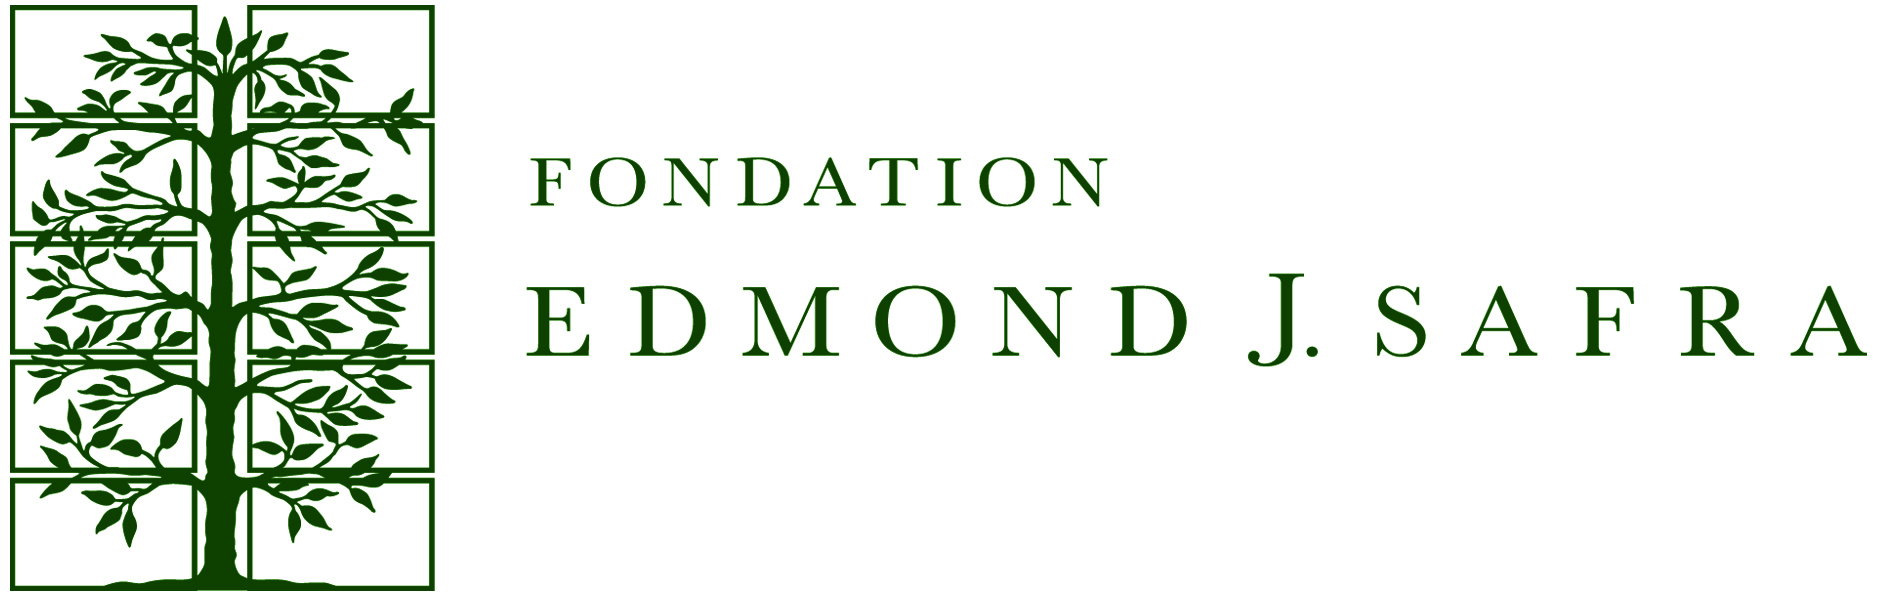 Fondation Edmond J. Safra 